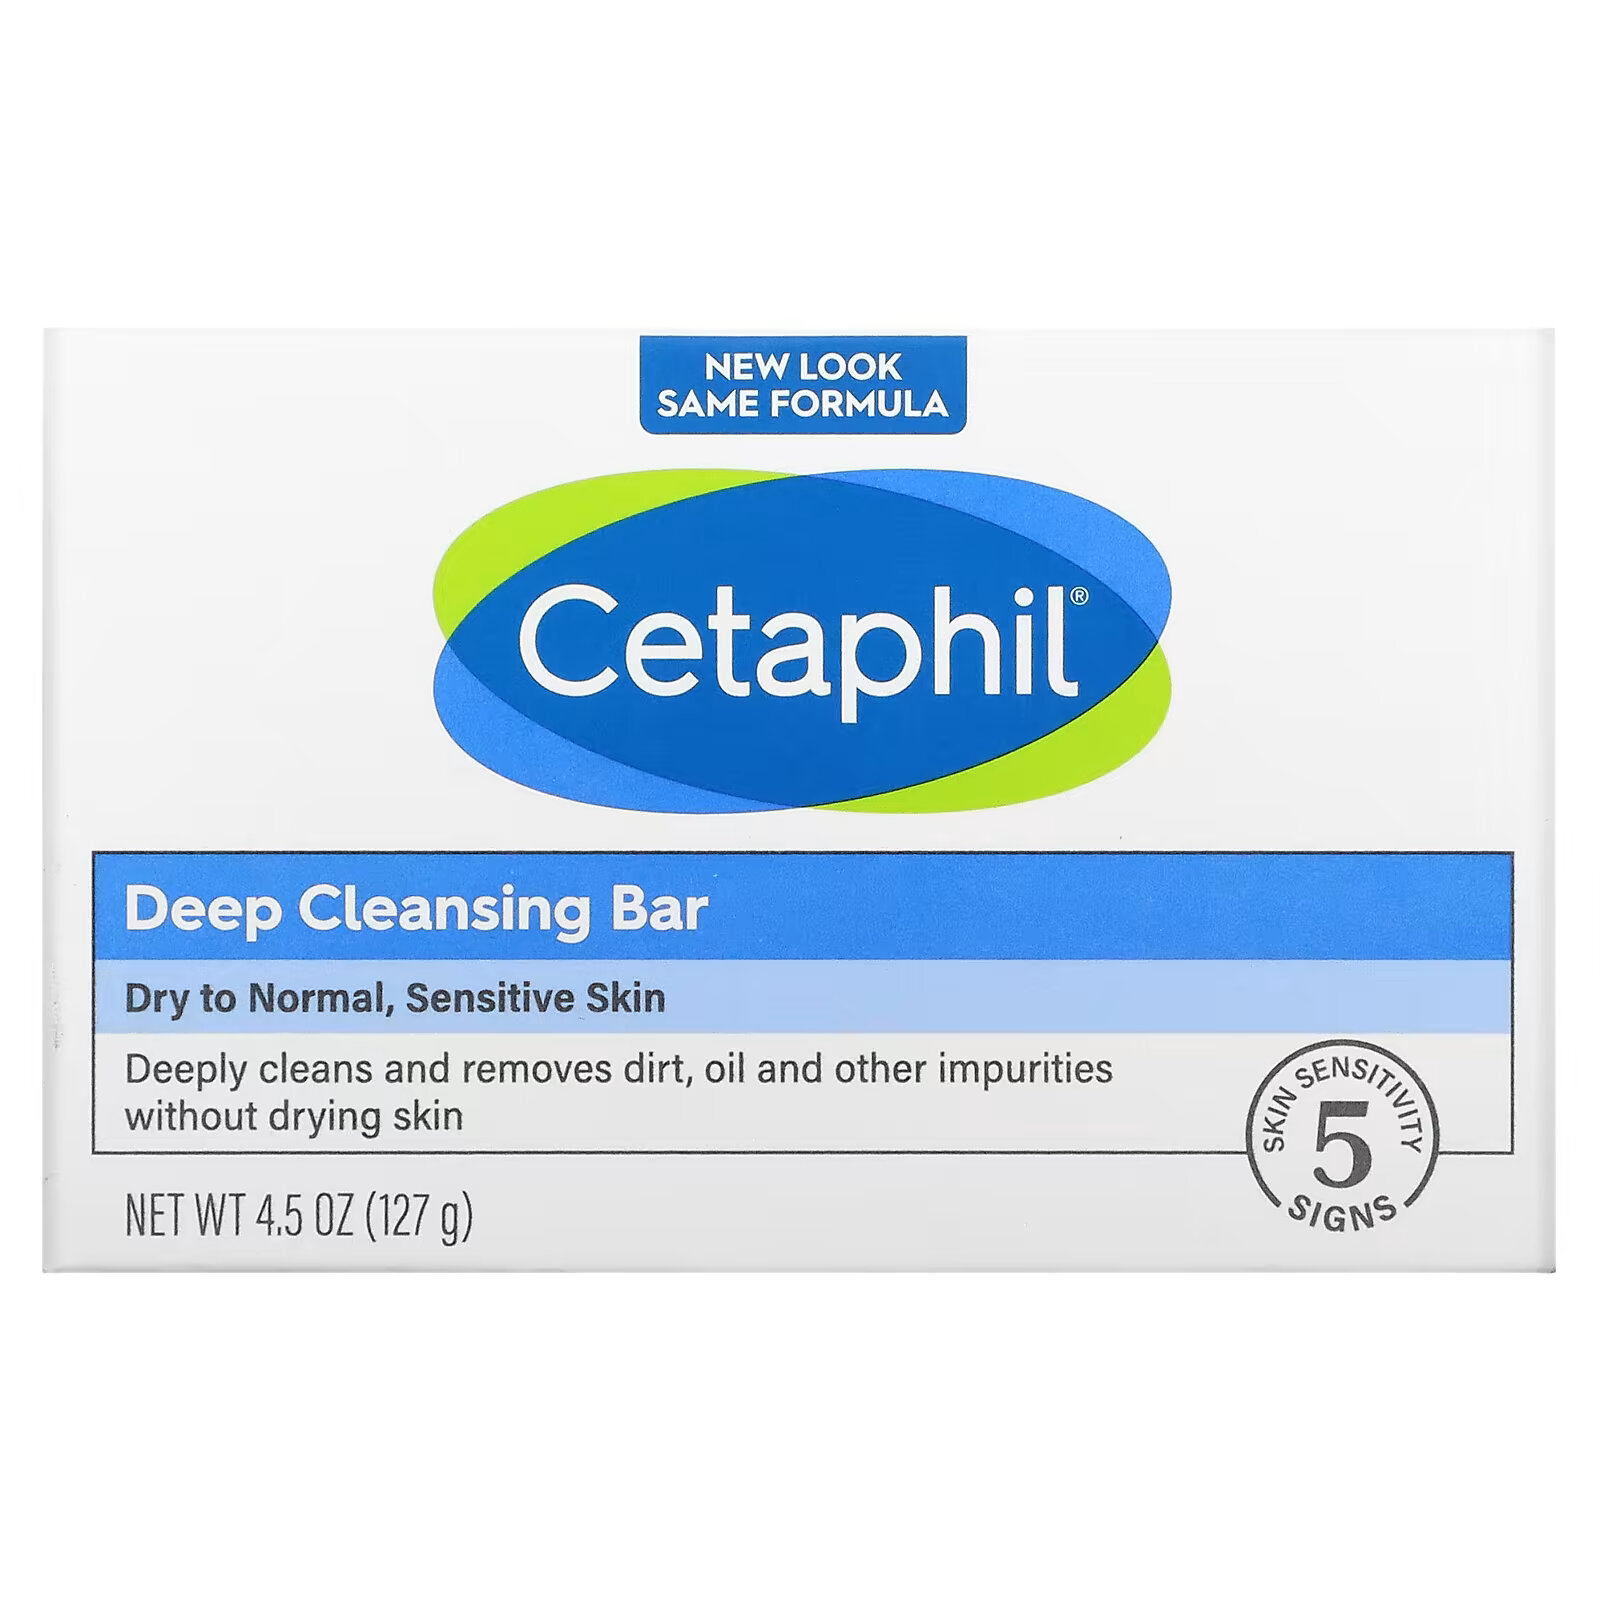 Мыло Cetaphil для глубокого очищения, 127 г cetaphil мыло для глубокого очищения 127 г